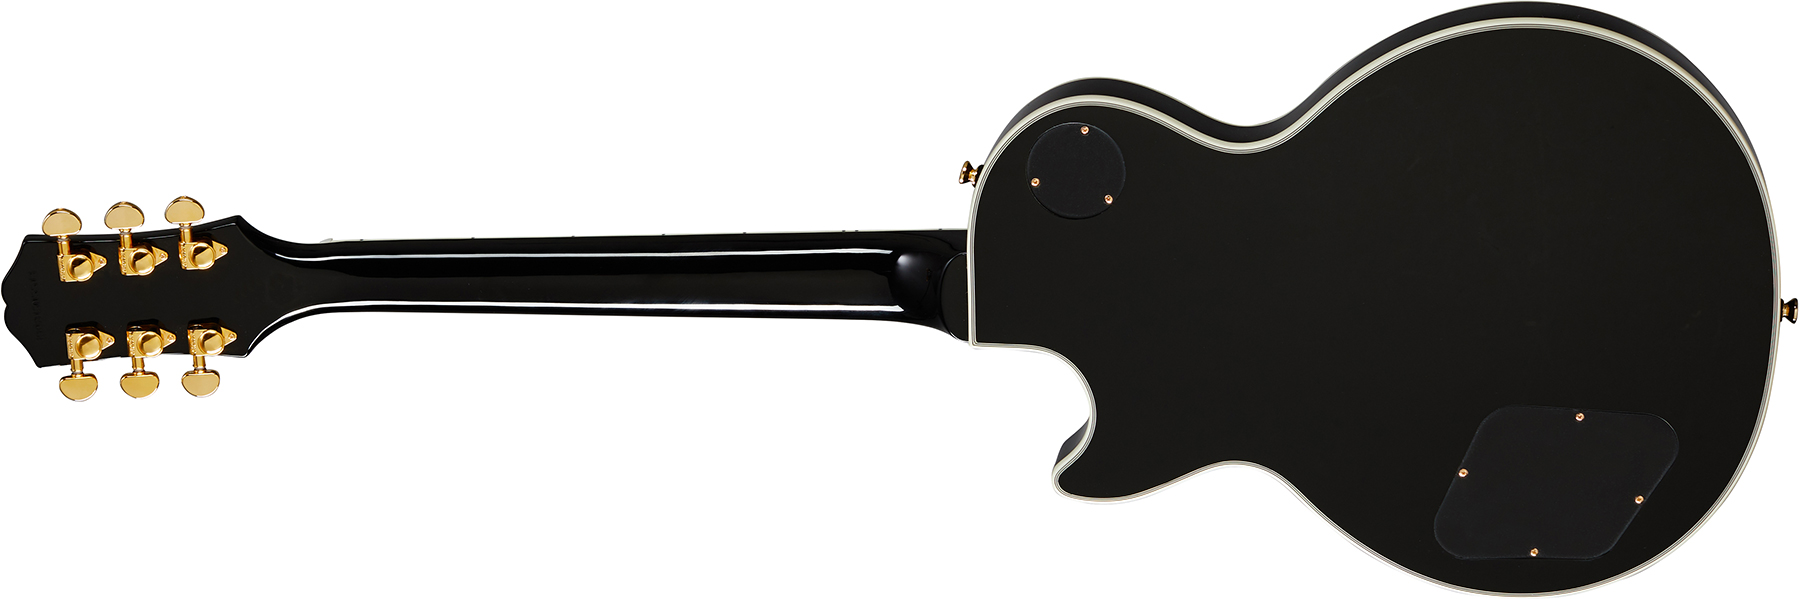 Epiphone Les Paul Custom 2h Ht Eb - Ebony - Enkel gesneden elektrische gitaar - Variation 1